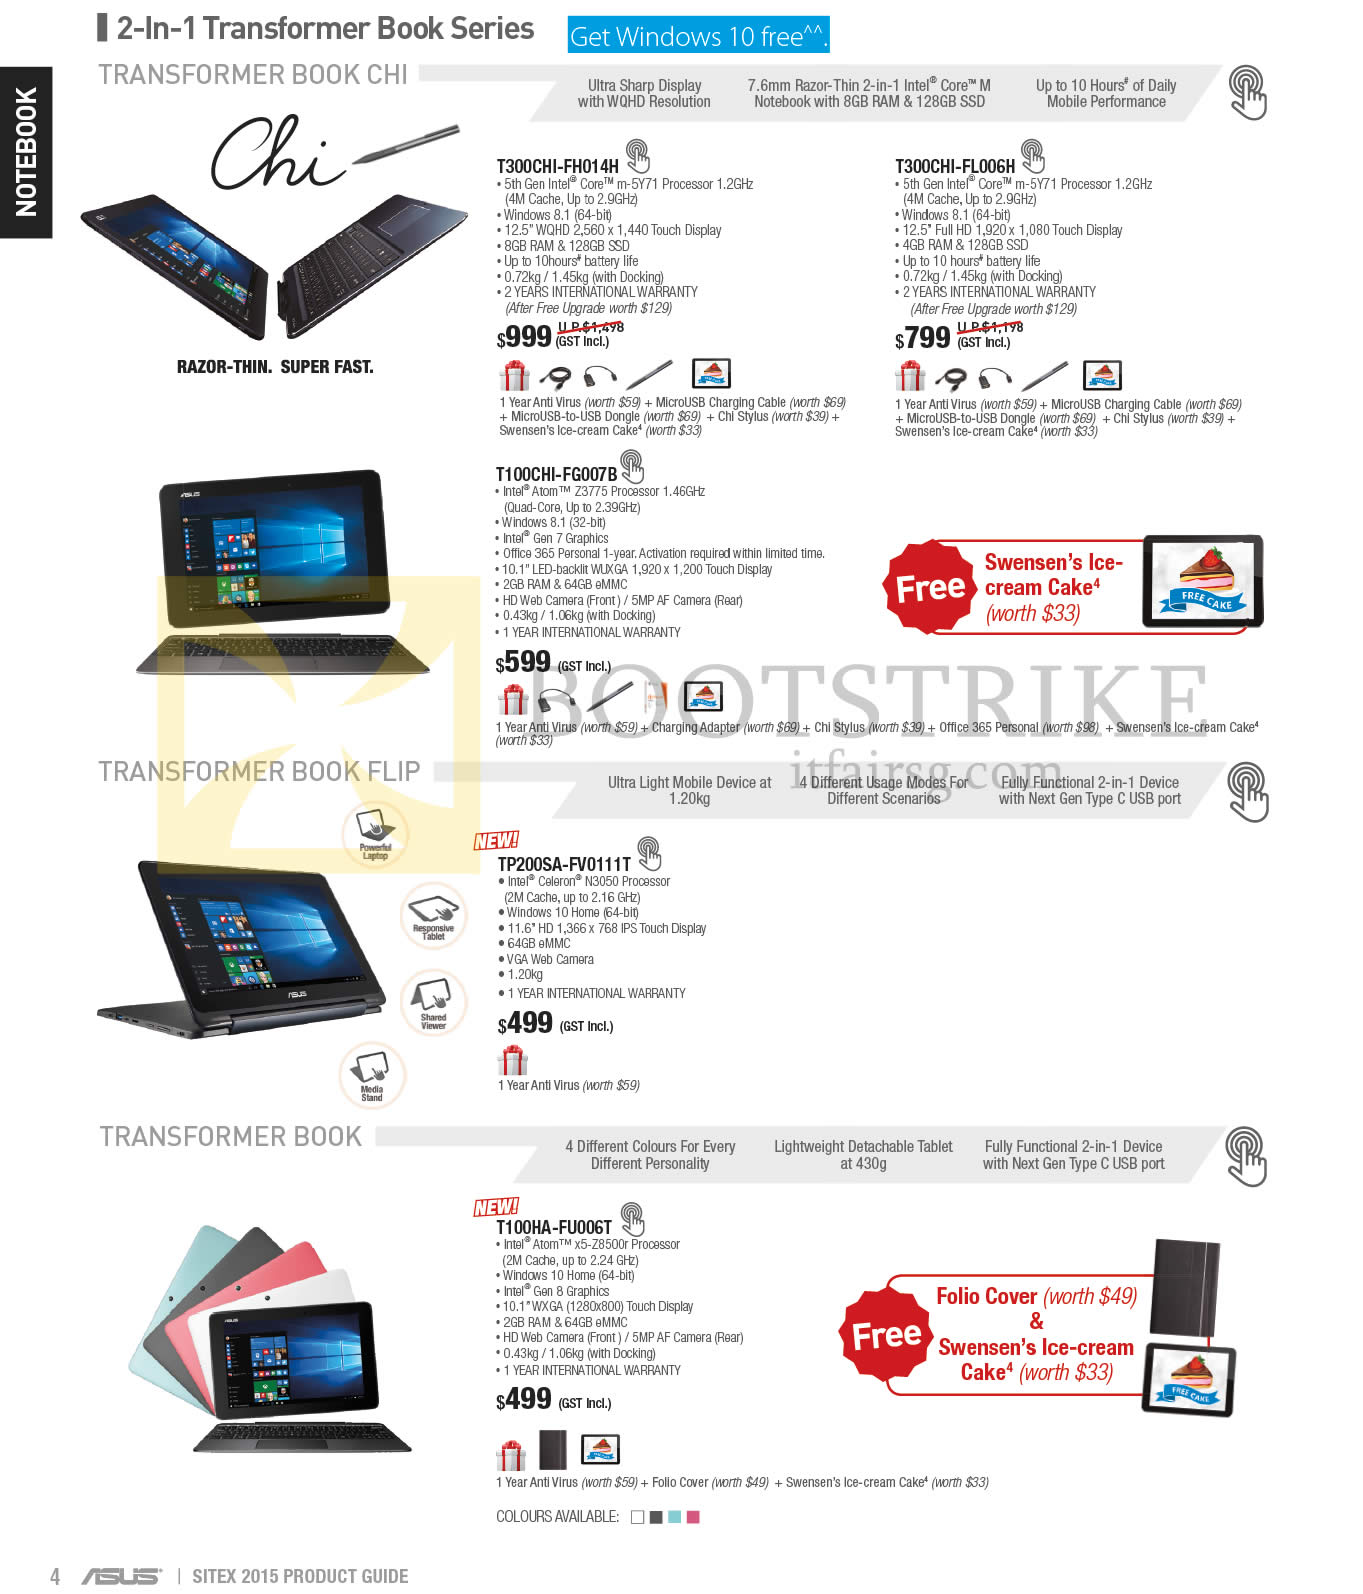 SITEX 2015 price list image brochure of ASUS Tablets 2-ln-1 Transformer Book Series, T300CHI-FH014H, T300CHI-FL006H, T100CHI-FG007B, TP200SA-FV0111T, T100HA-FU006T